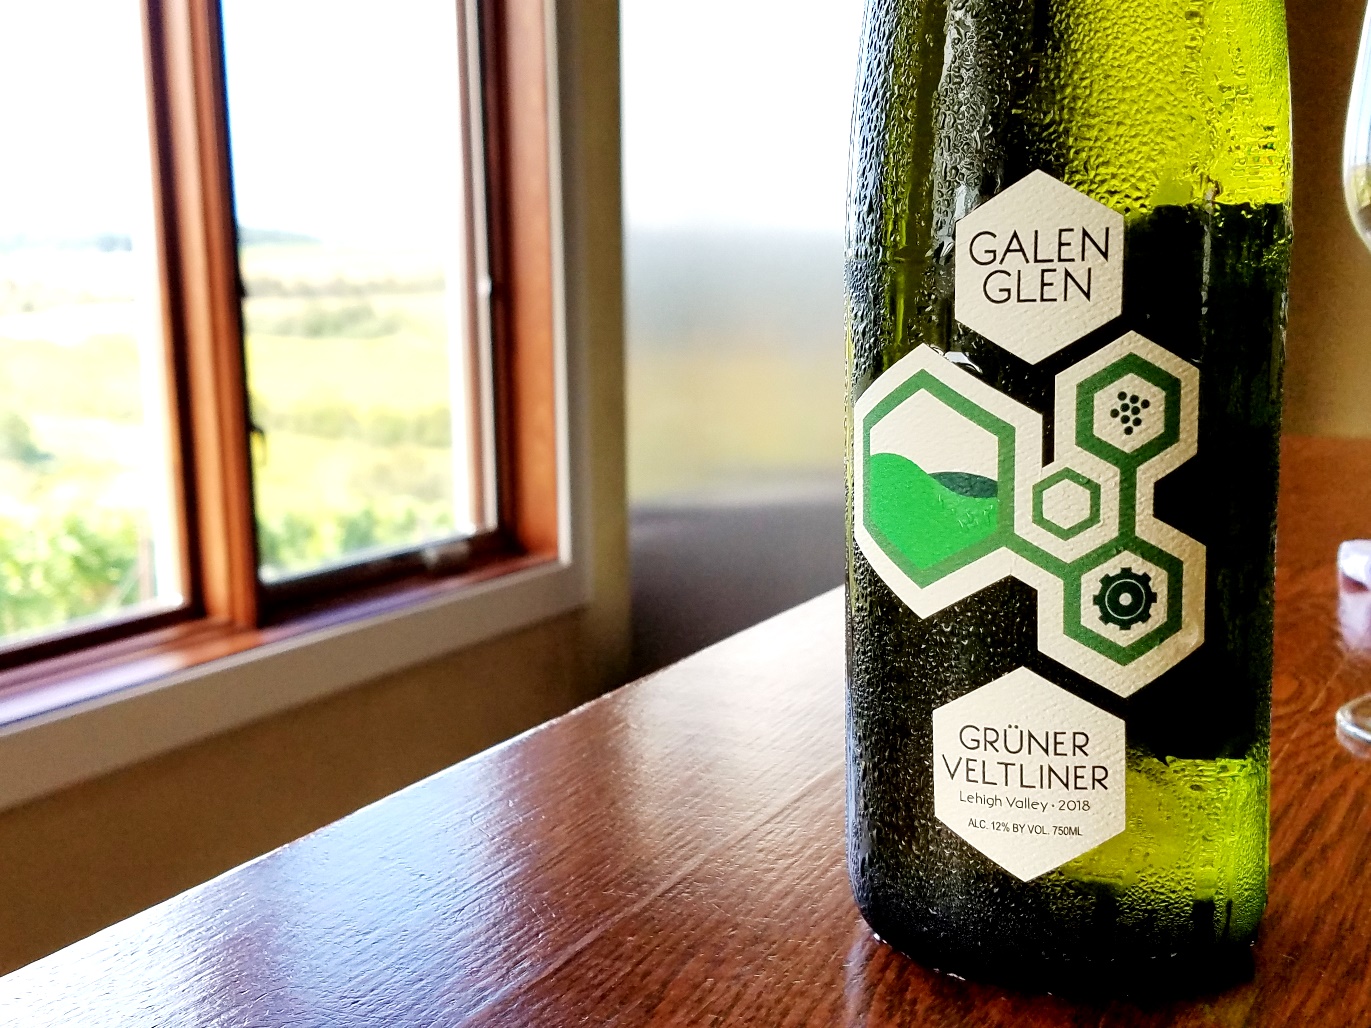 Galen Glen, Grüner Veltliner 2018, Vinology, Lehigh Valley, Pennsylvania, Wine Casual